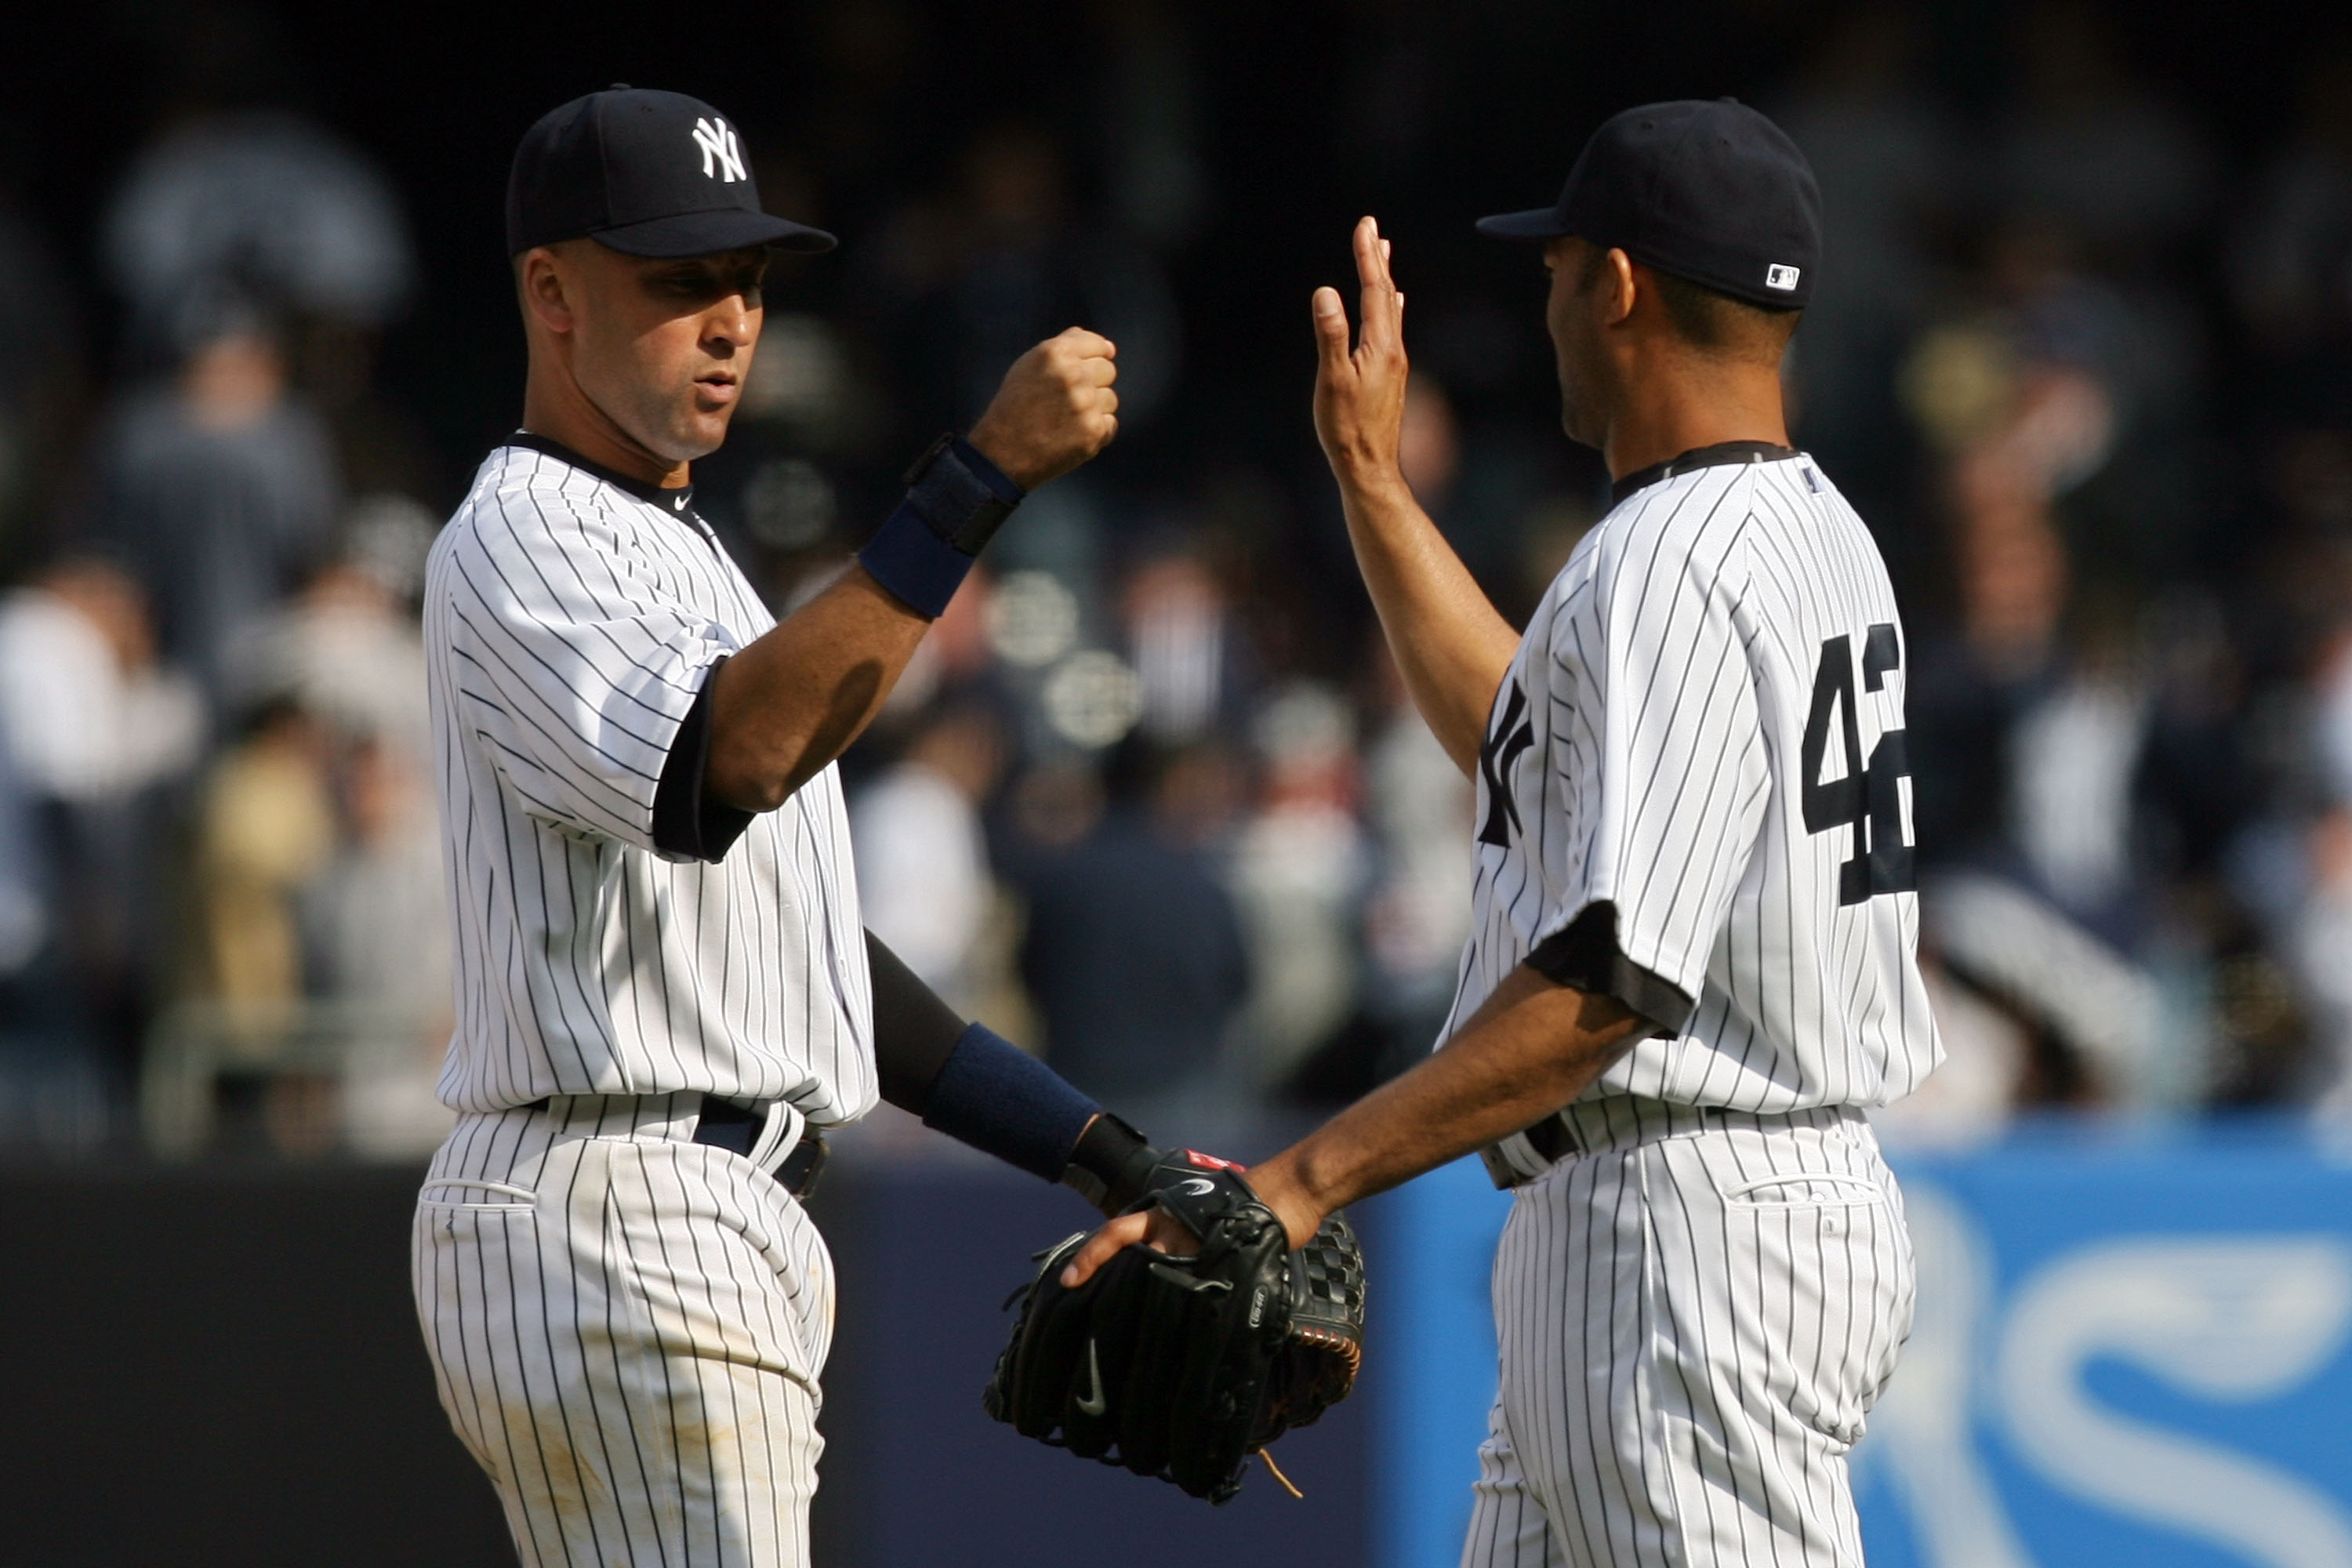 New York Yankees Dynasty Signed Jersey Derek Jeter Mariano Rivera